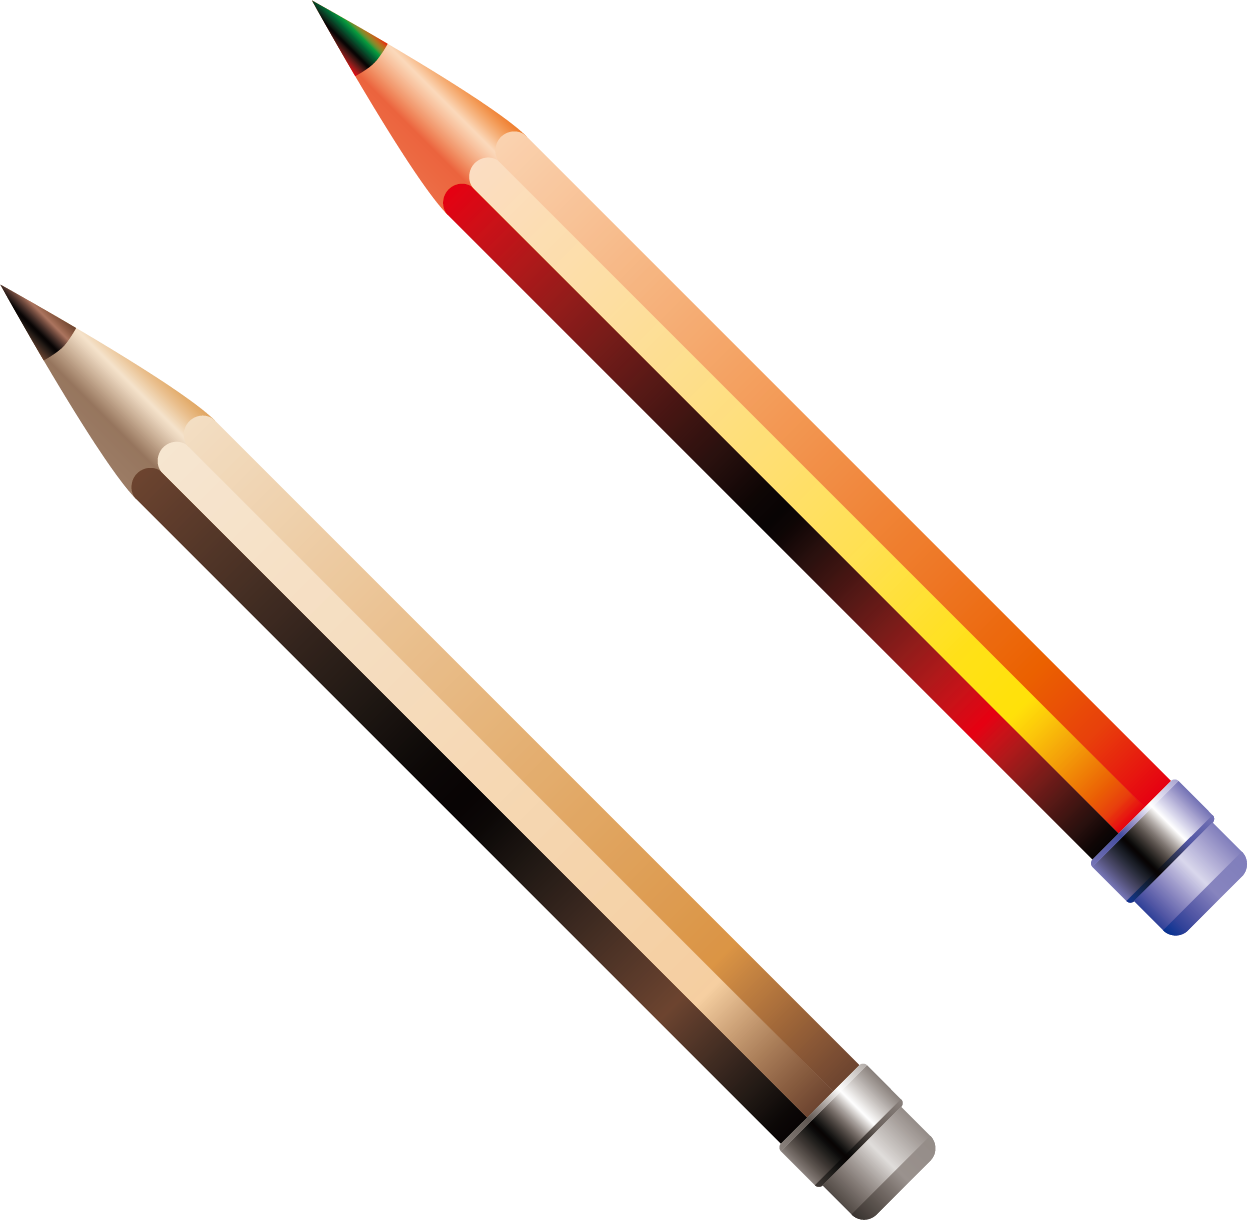 Pencil download. Изображение карандаша. Векторный карандаш. Карандаш на прозрачном фоне. Ручка карандаш.